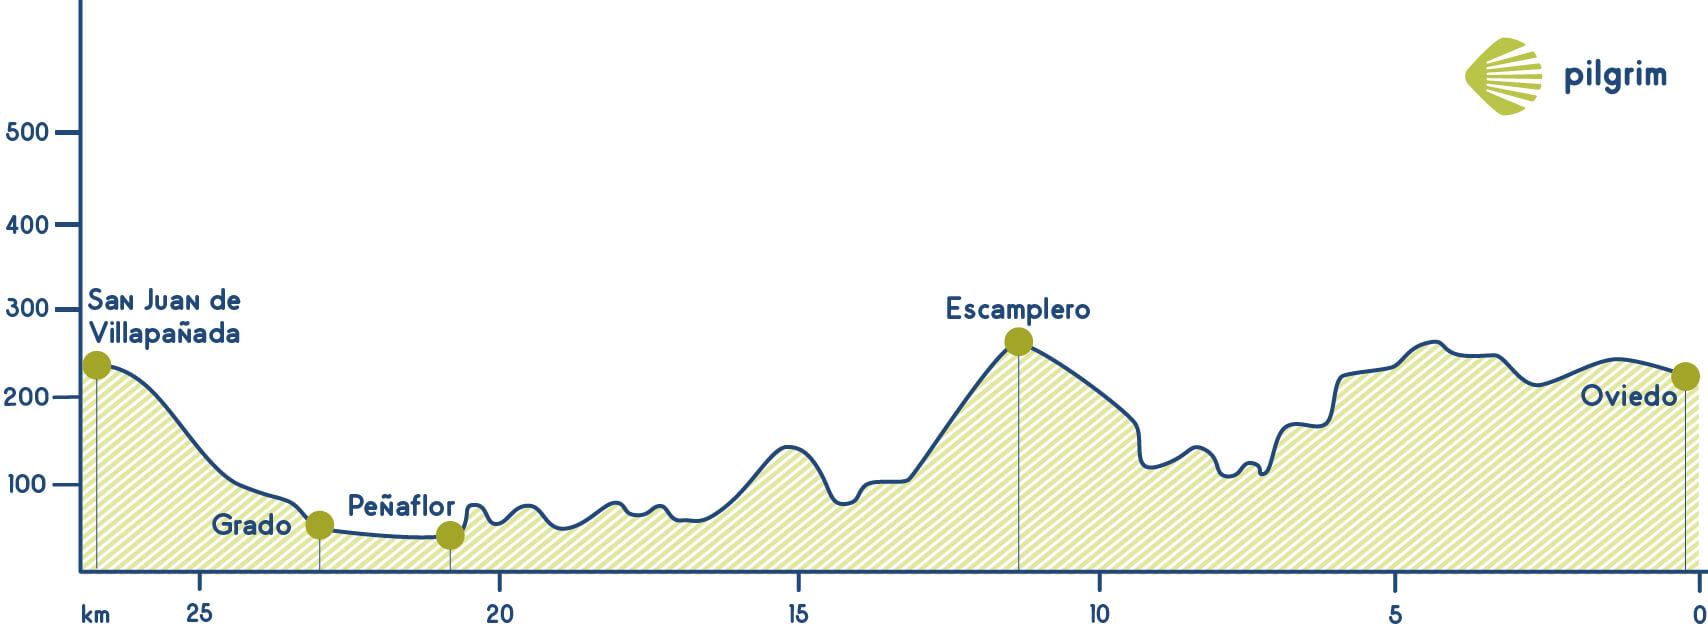 Stage 1 Camino Primitivo